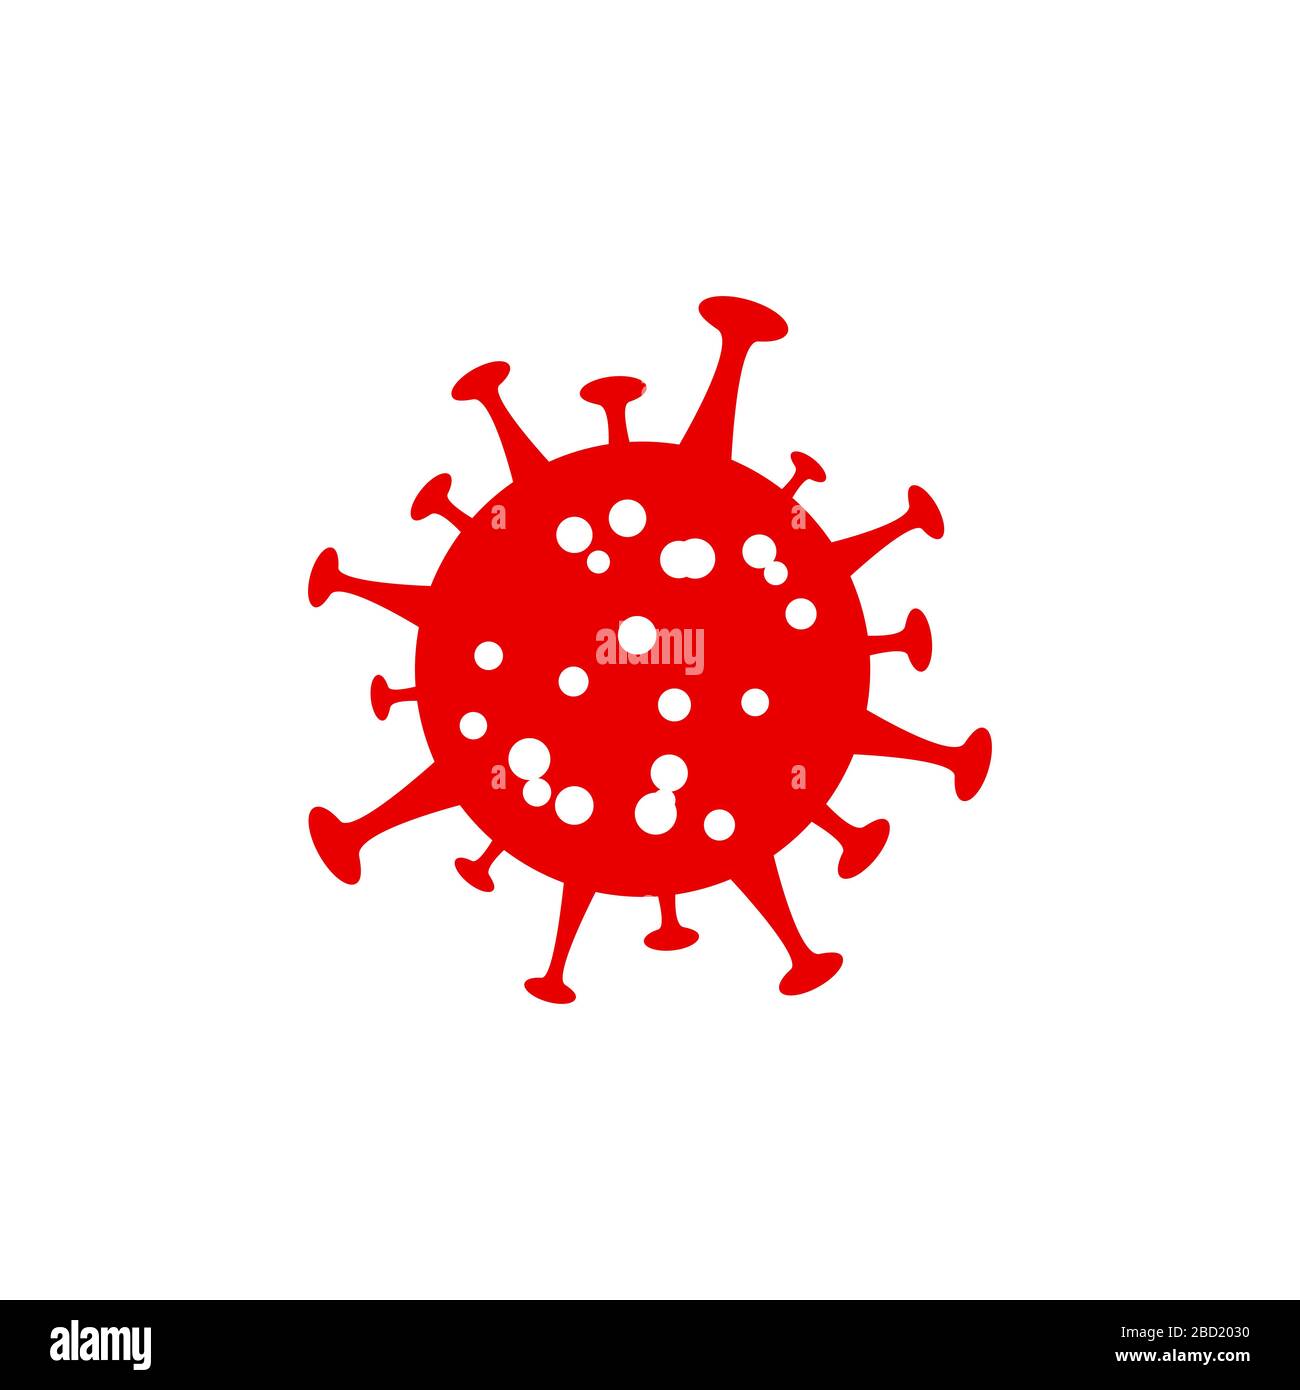 Flu infection. Red Symbol Corona Virus Infection. Medicine warning pandemic epidemic and quarantine. Dangerous disease. Vector illustration Stock Vector